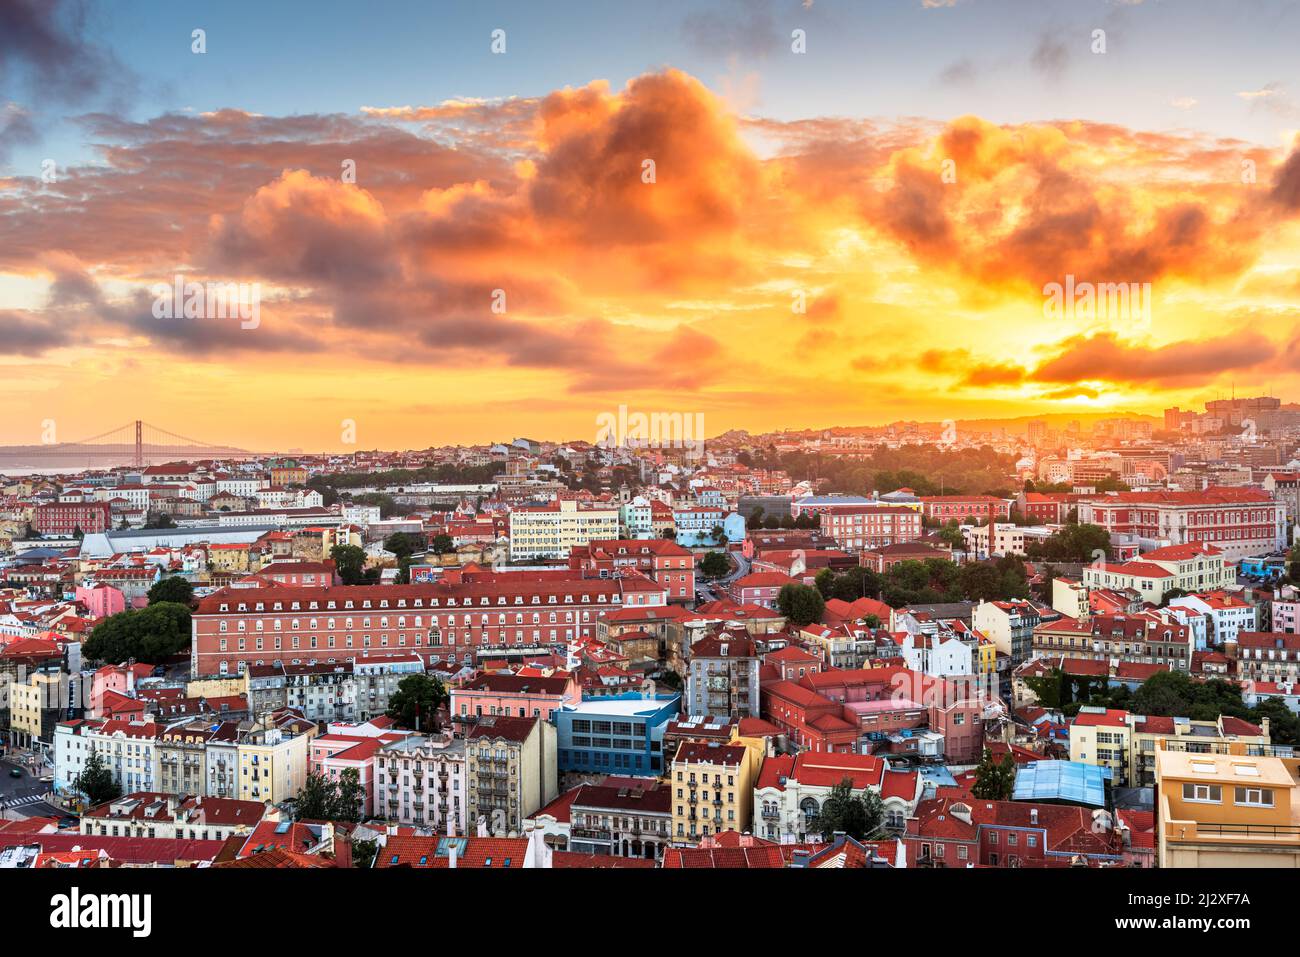 Lisbon, Portugal downtown skyline towards the river at dusk. Stock Photo